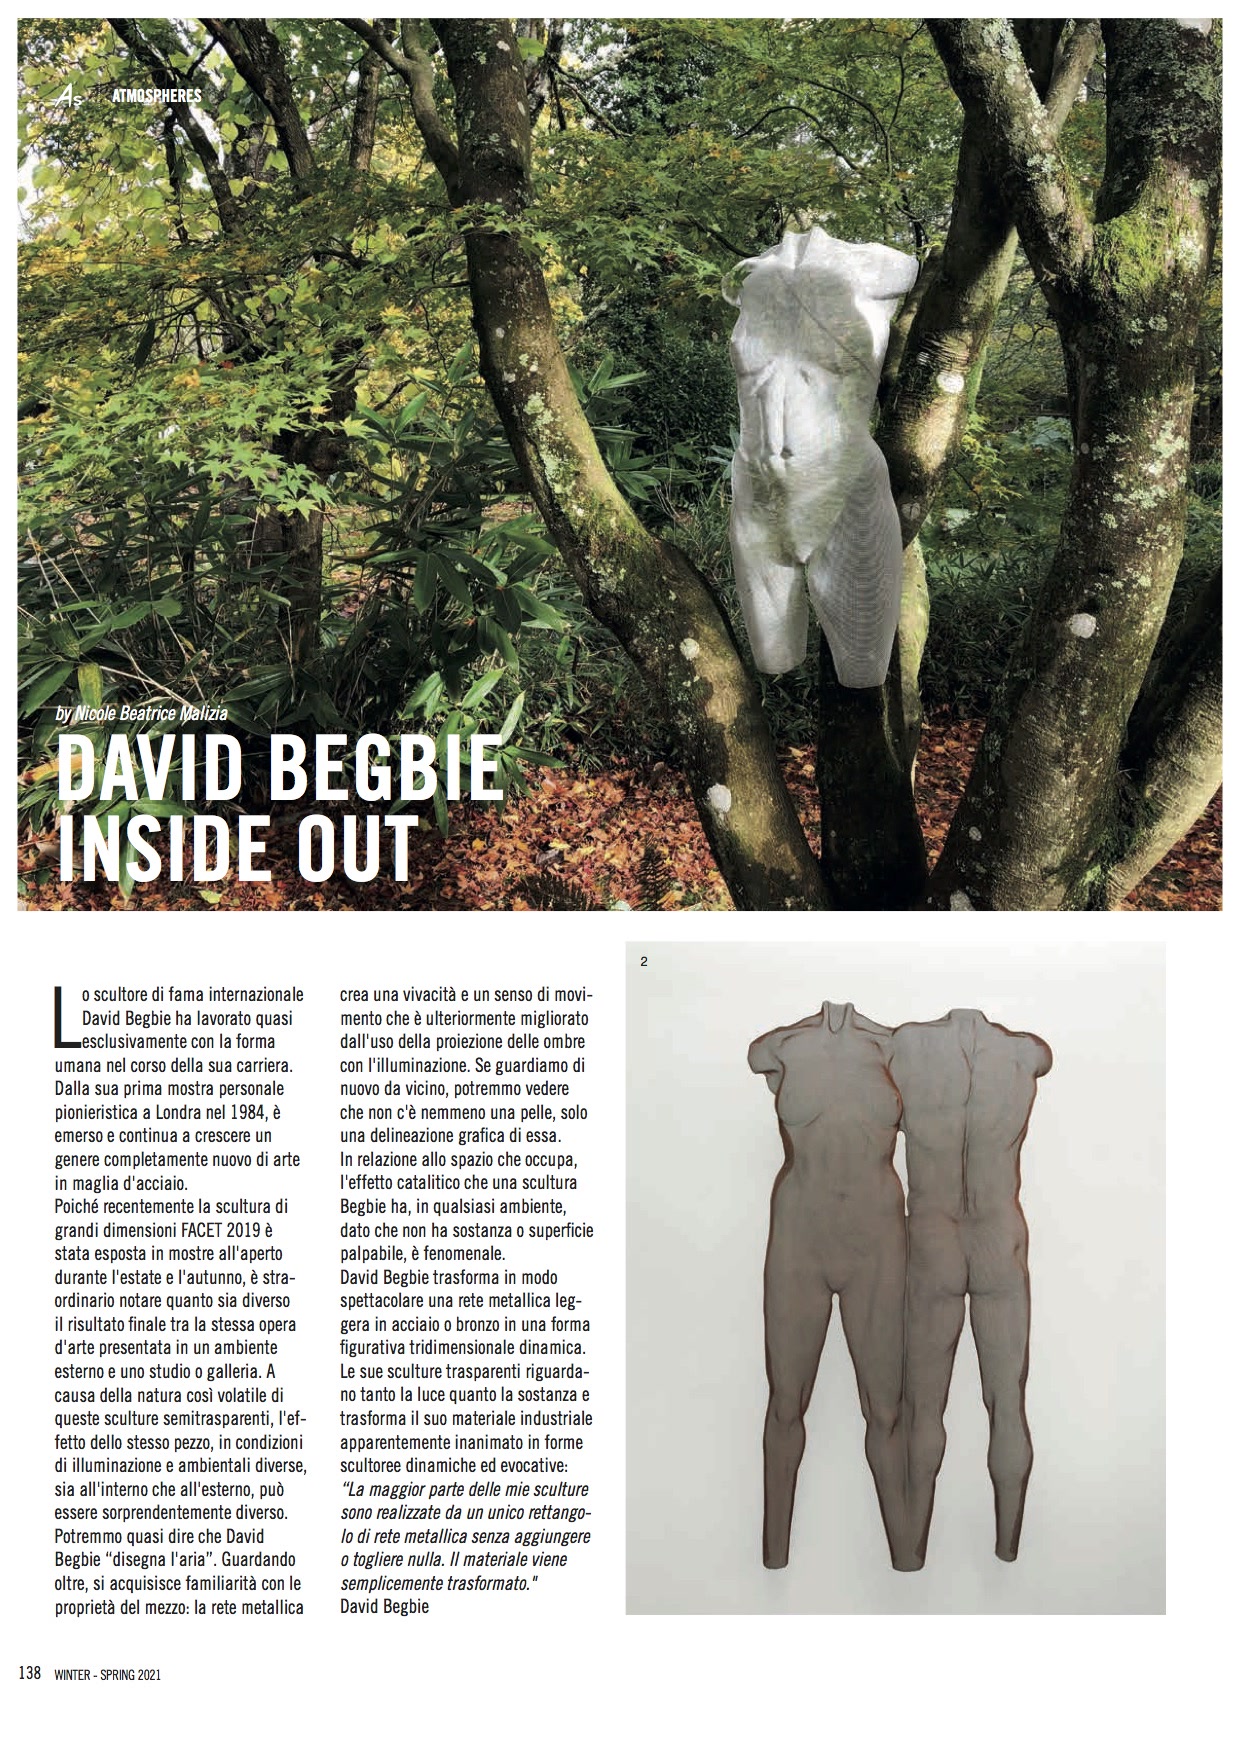 An article about artist David Begbie in AtStyle Magazine